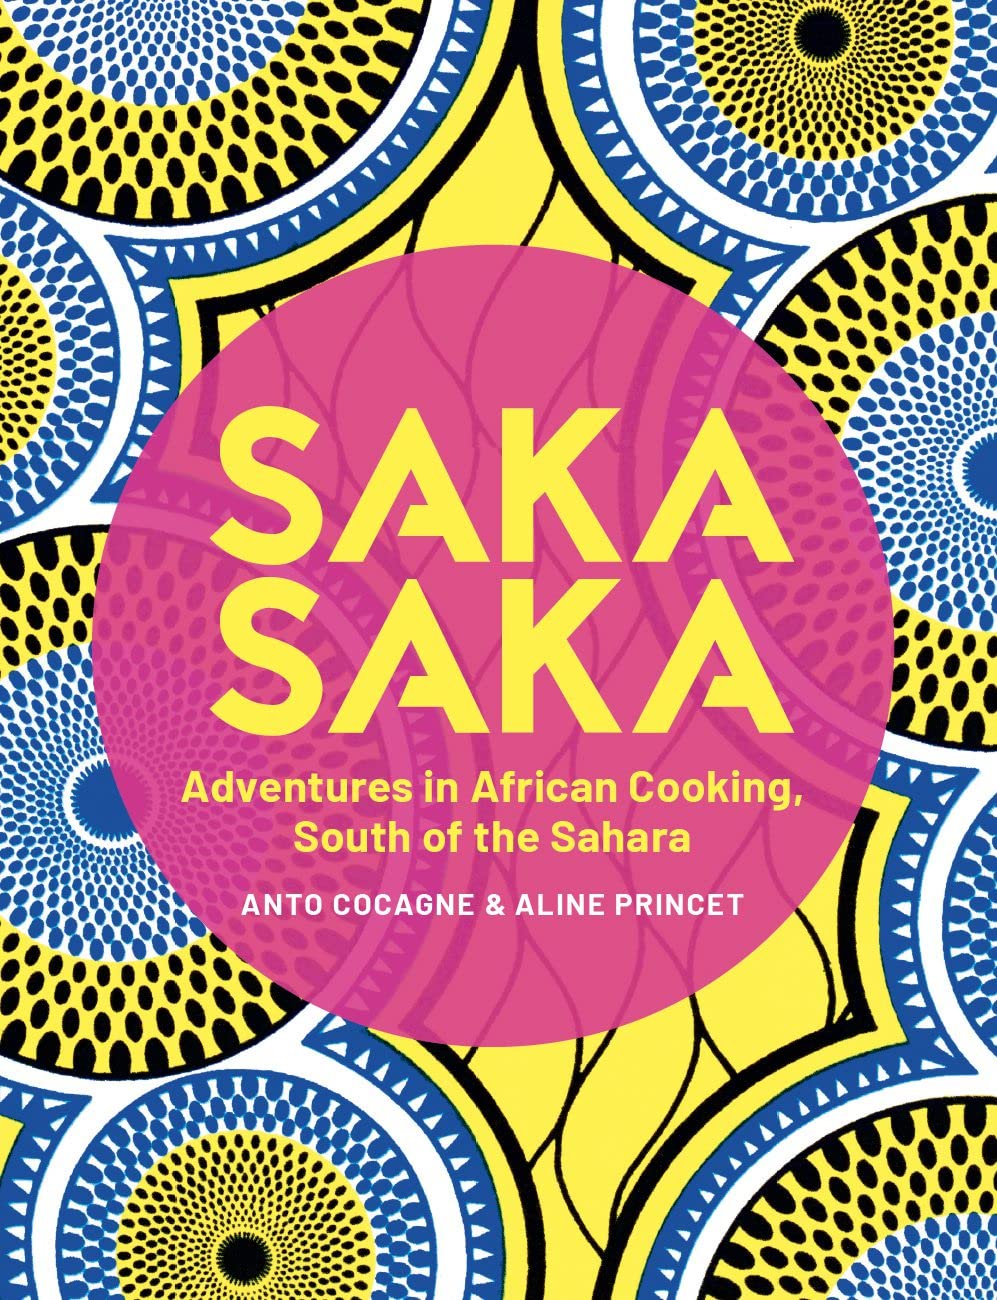 Saka Saka: South of the Sahara – Adventures in African Cooking (Anto Cocagne, Aline Princet)